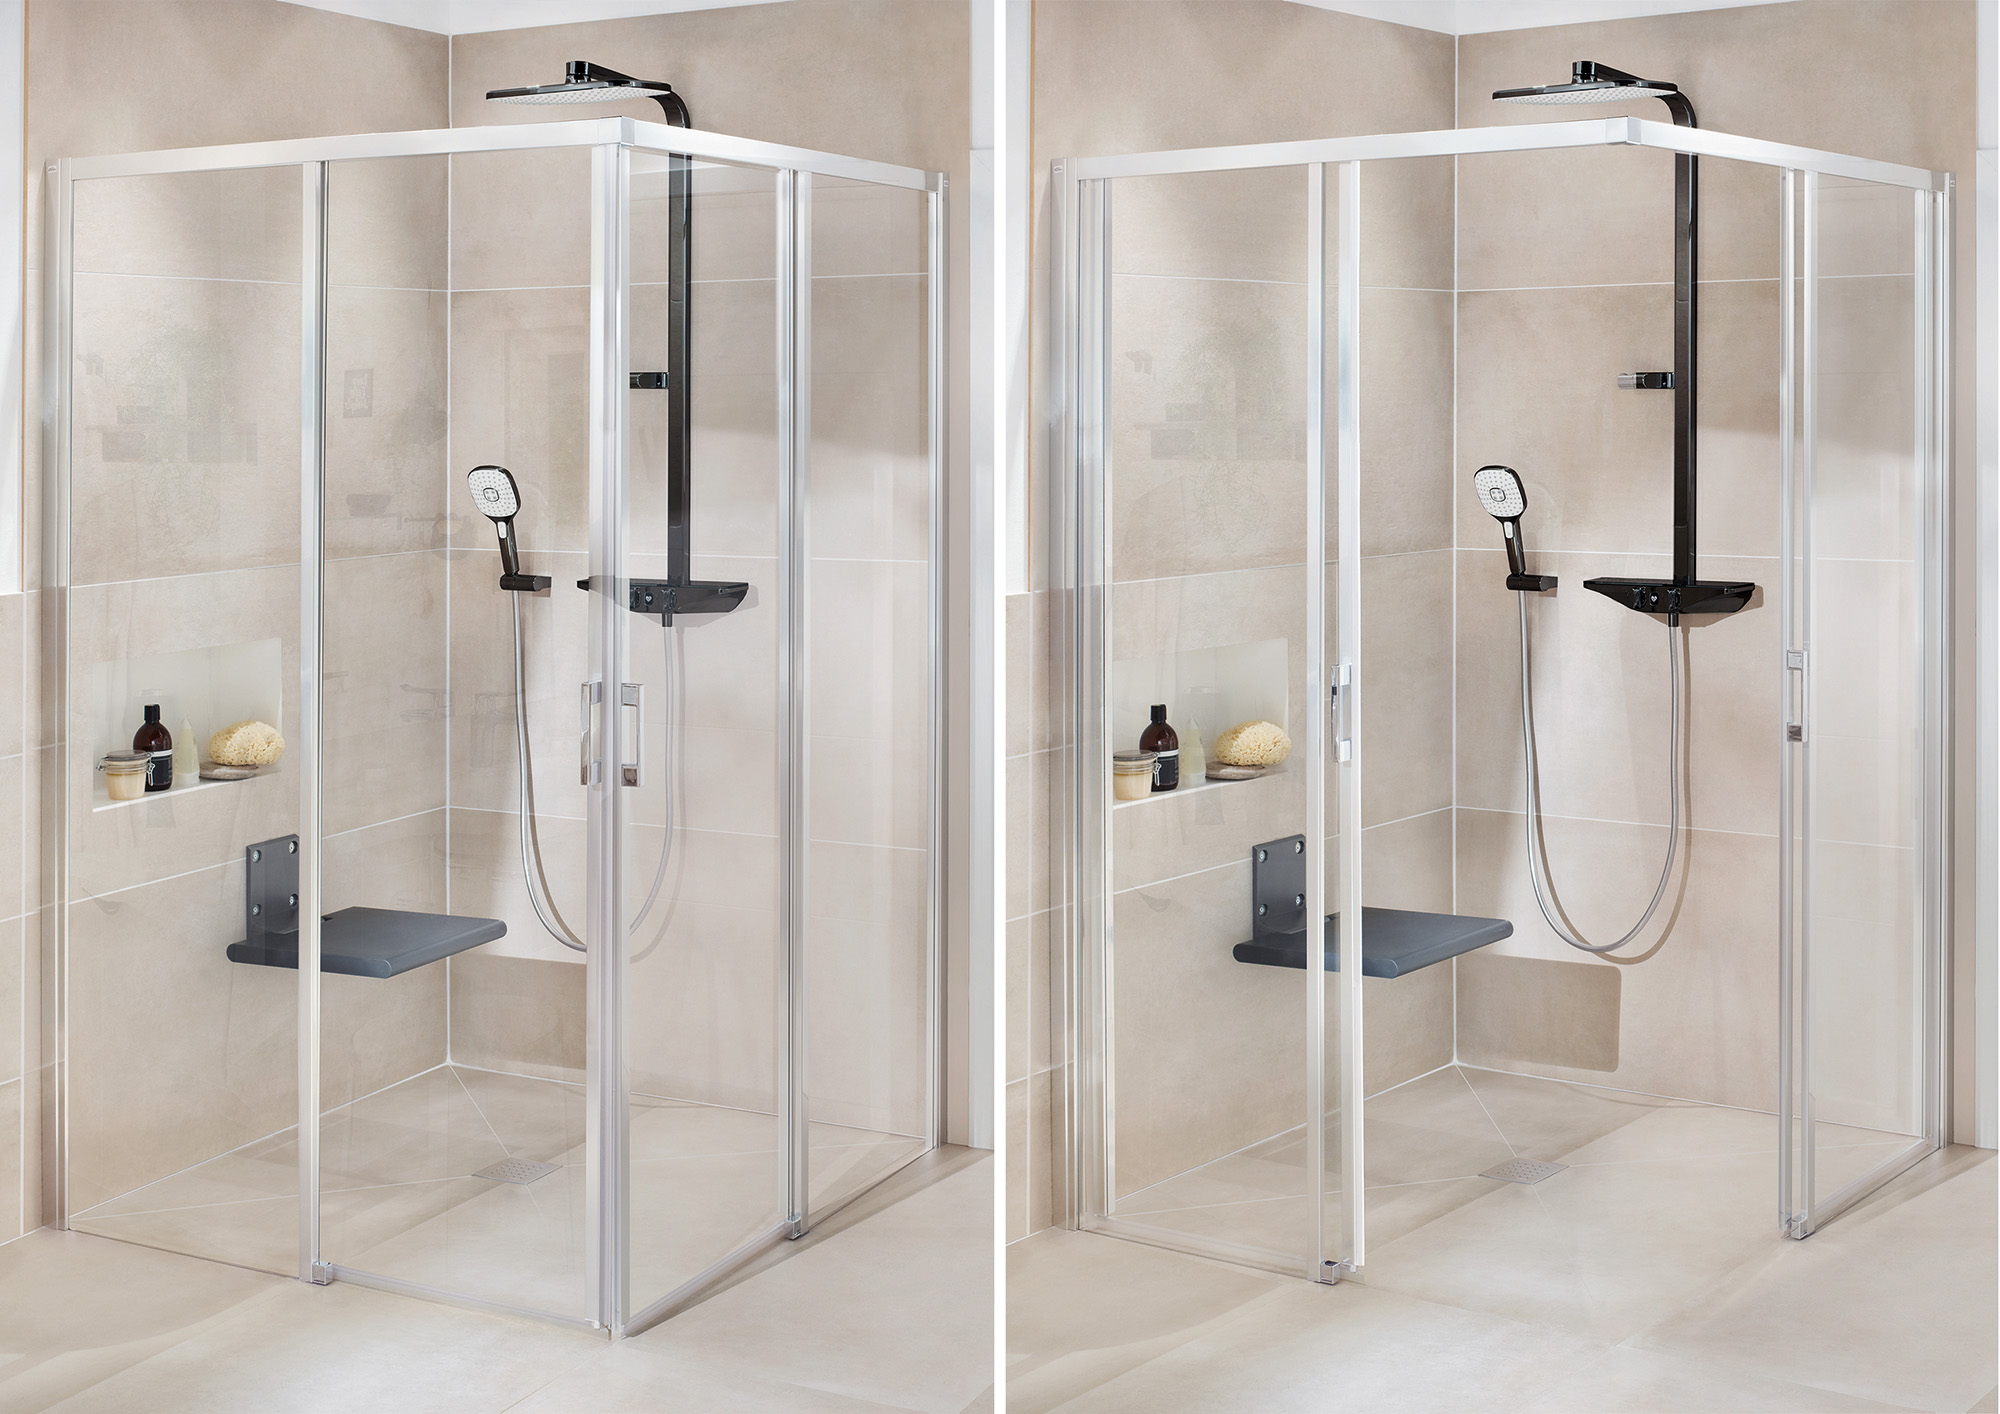 Kermi profile shower enclosure, LIGA Walk-In Wall sliding doors barrier-free